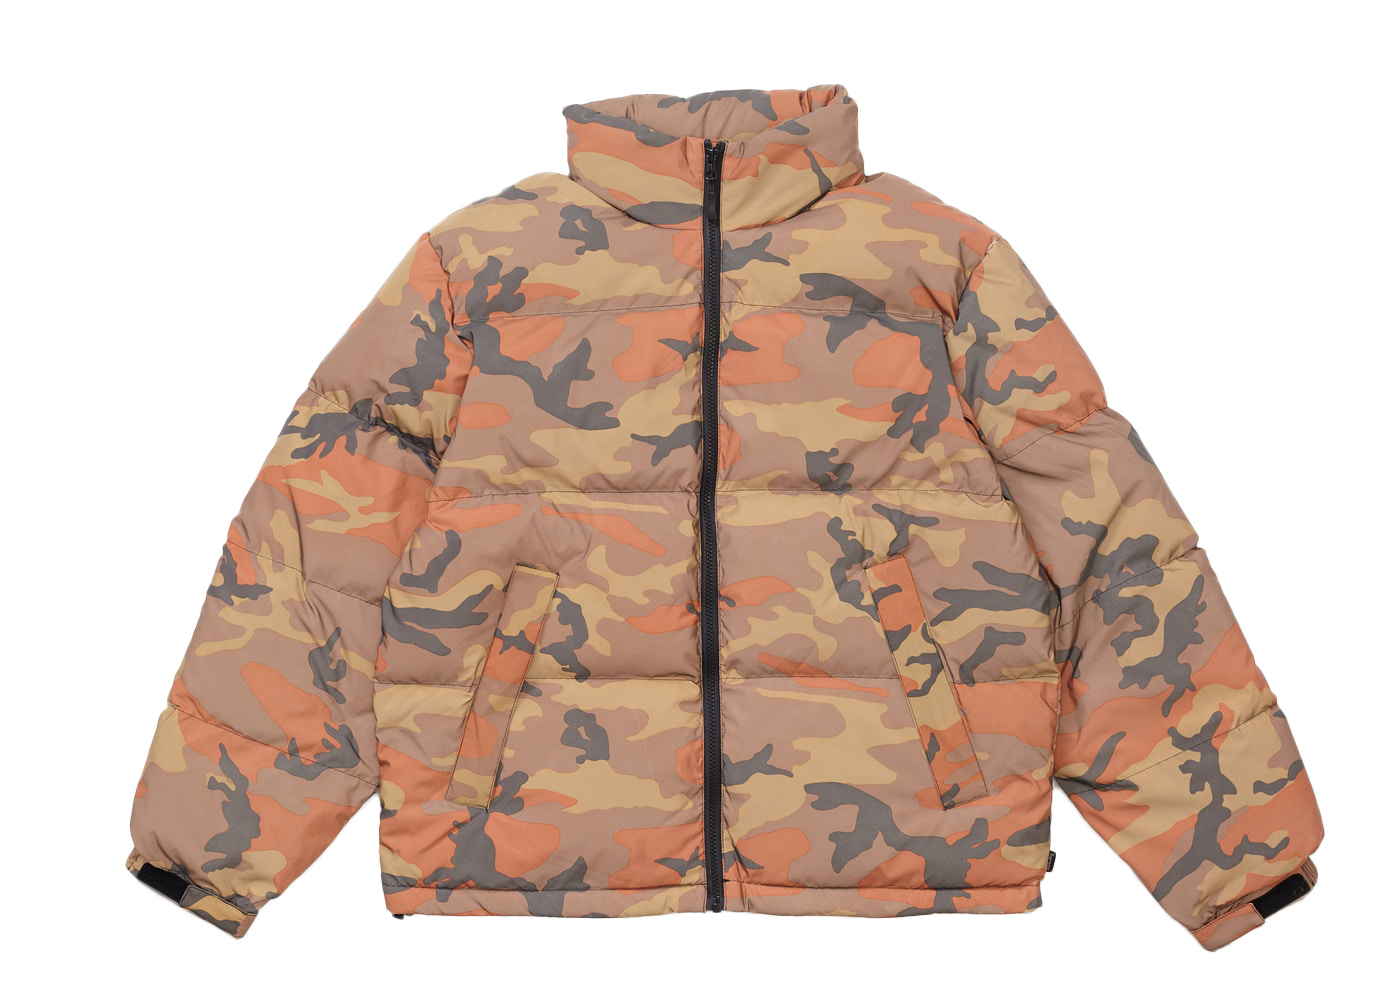 supreme jacket orange